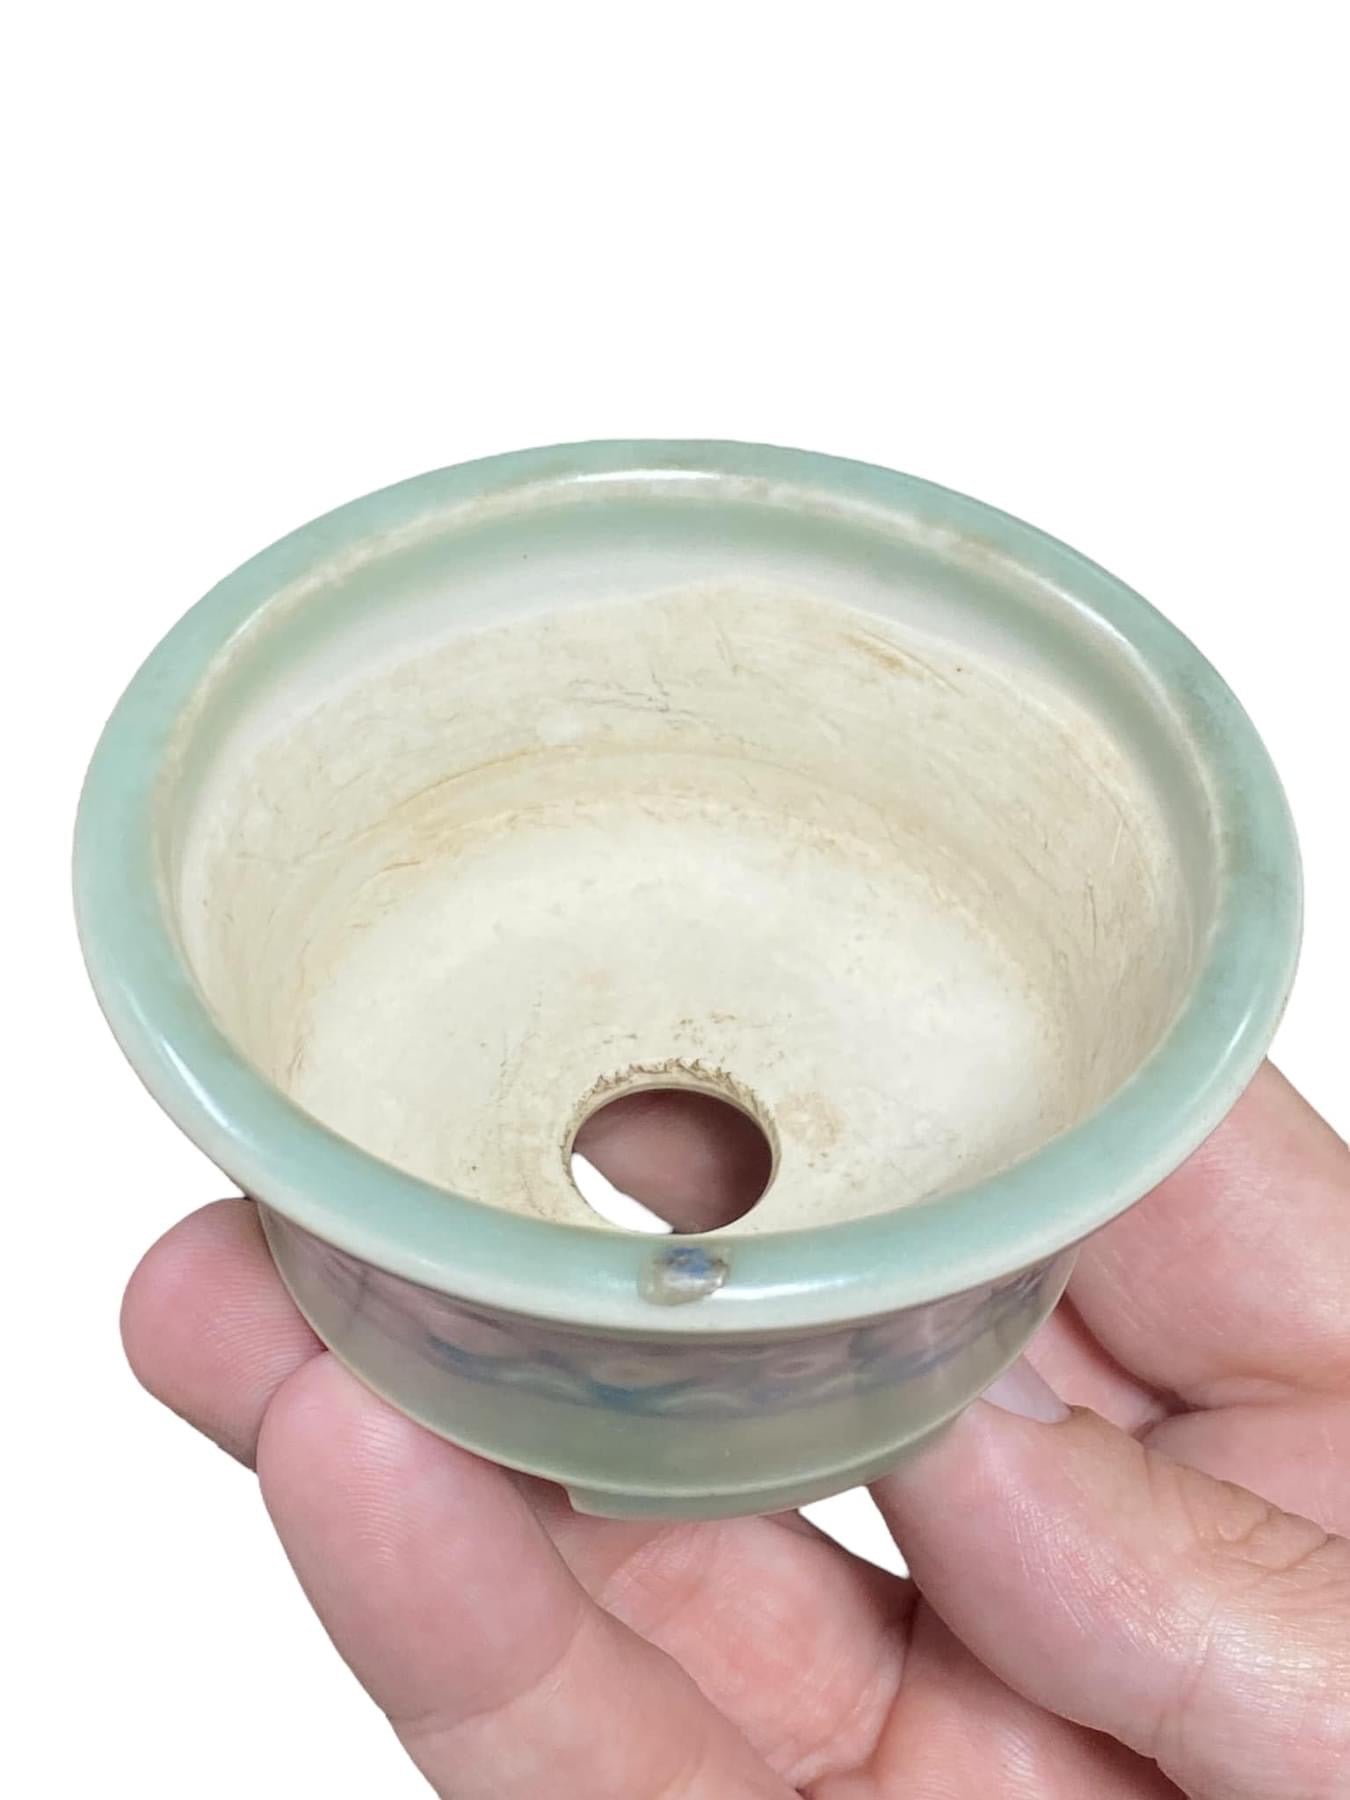 Tonyo - Rare and Highly Collectible Round Bonsai Pot